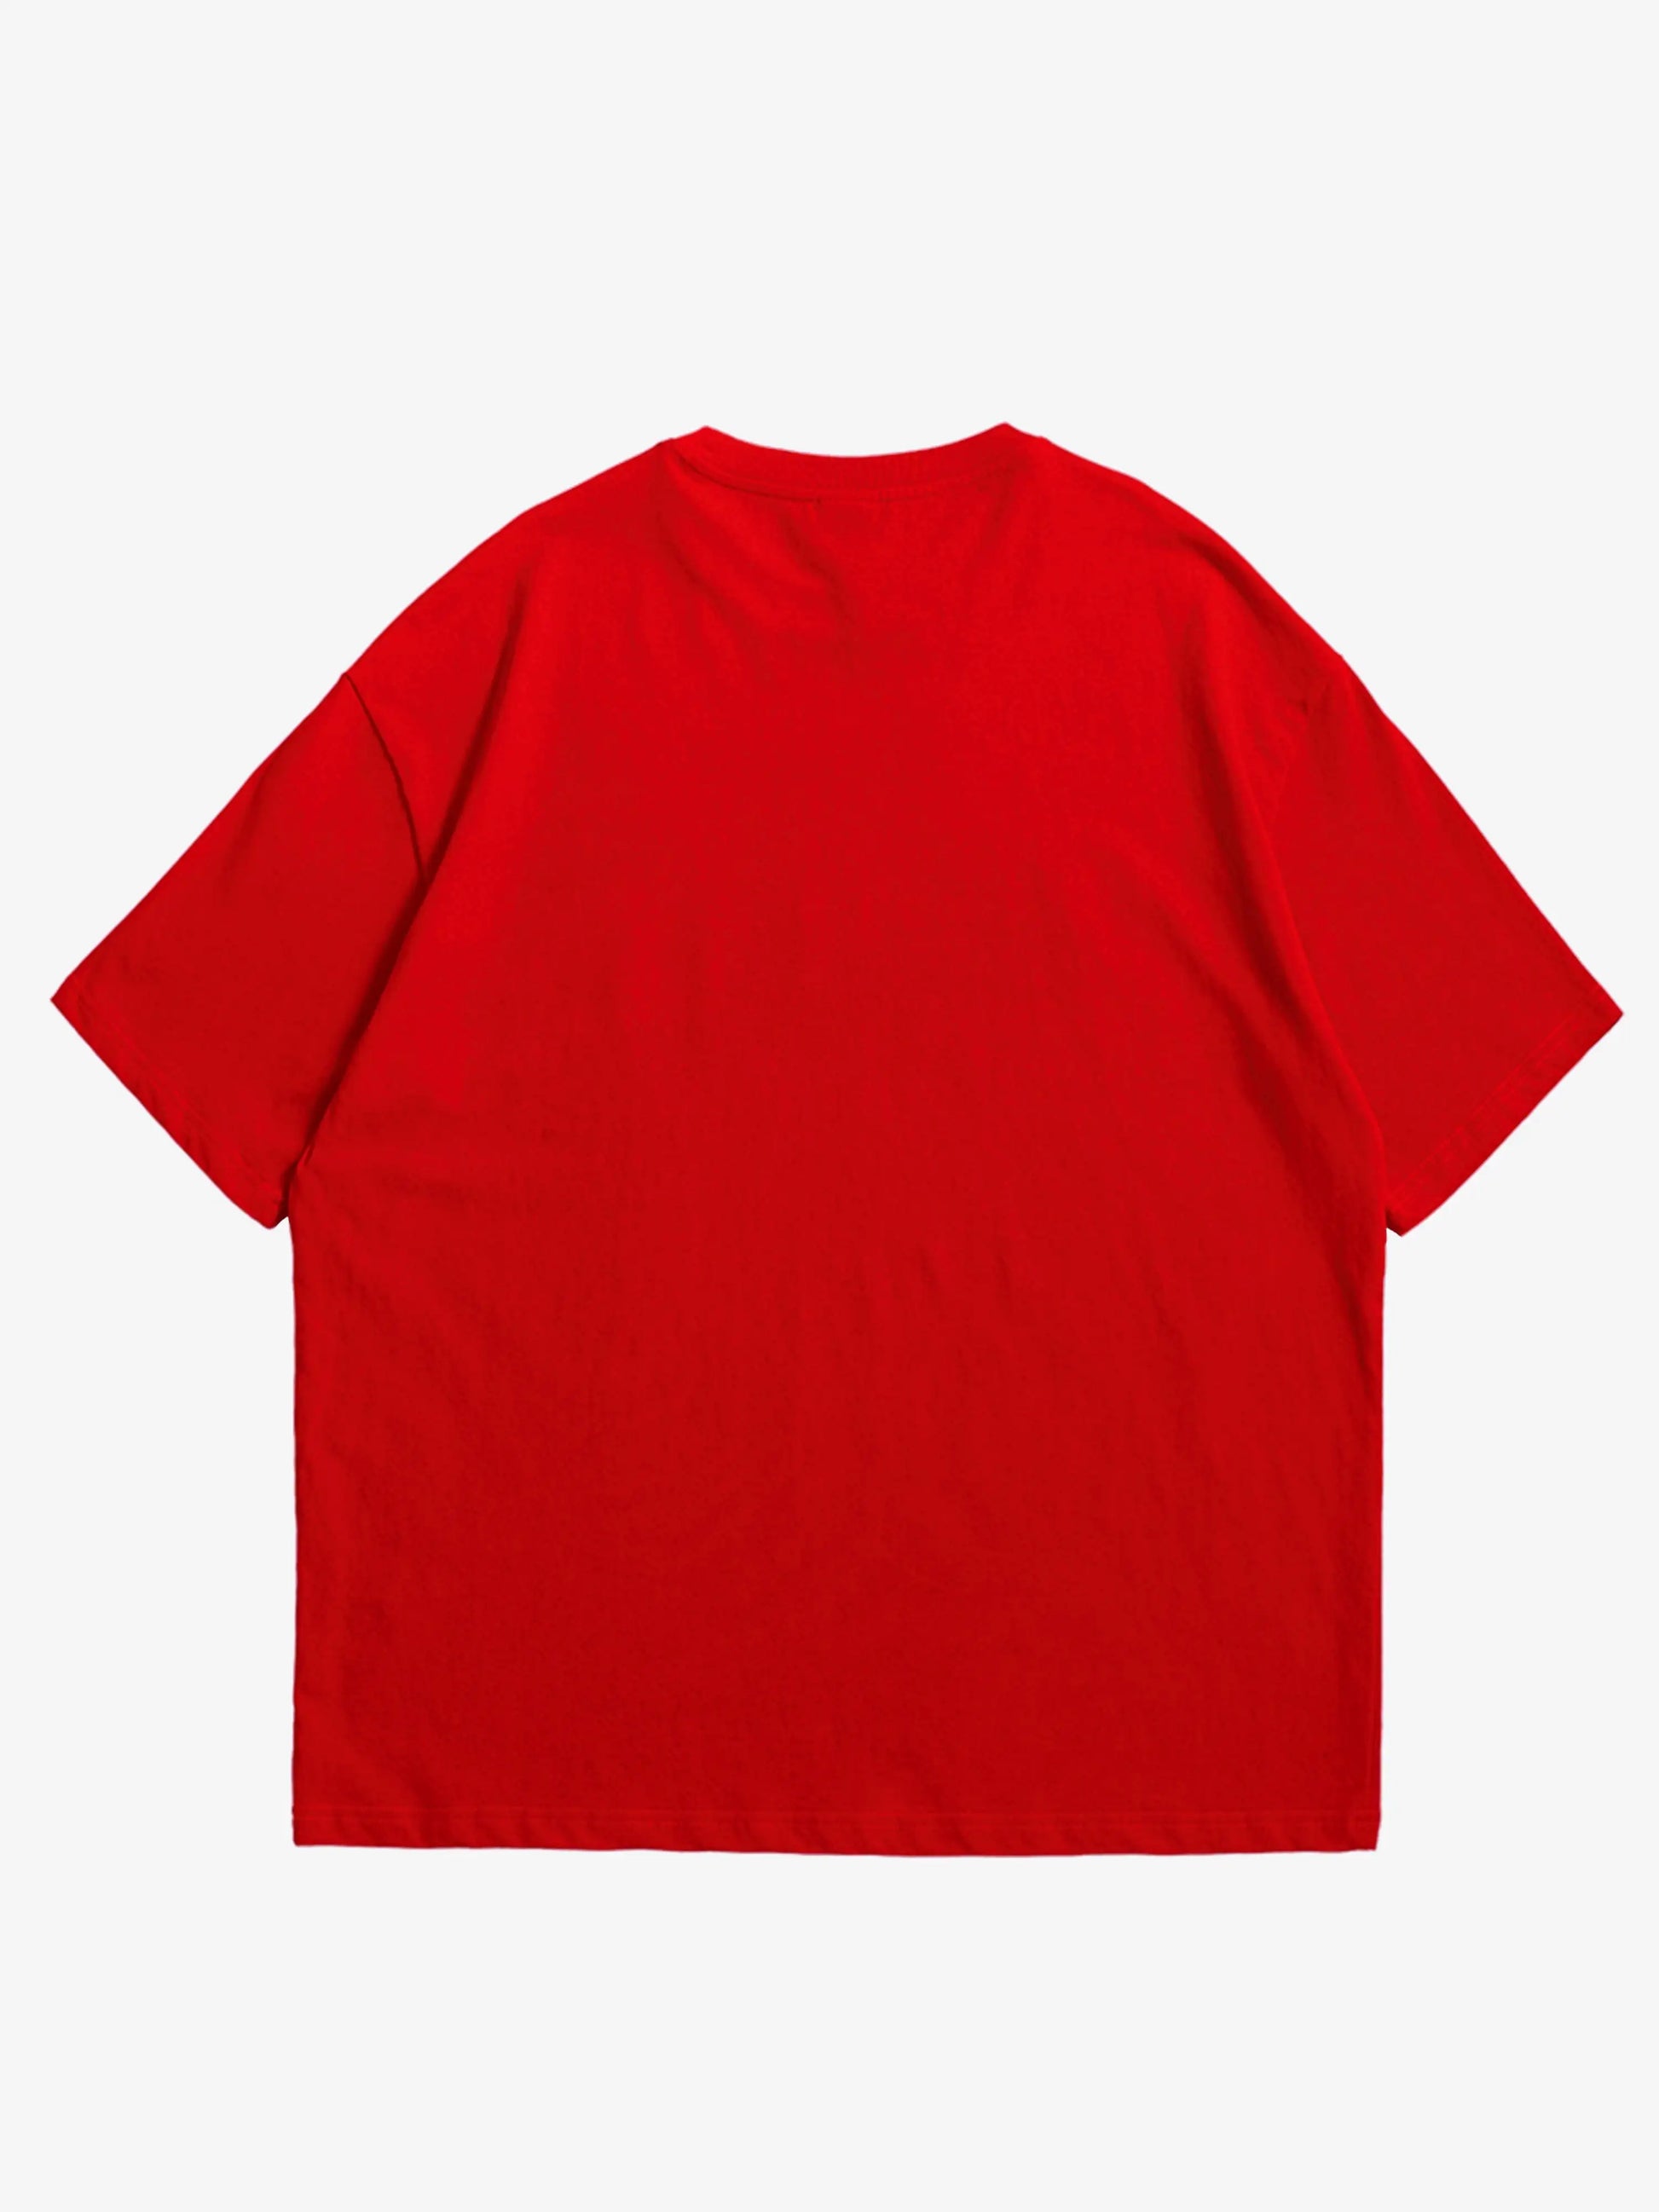 Red oversized T-shirt, Skream essentials graphic y2k print, skream streetwear t-shirt 